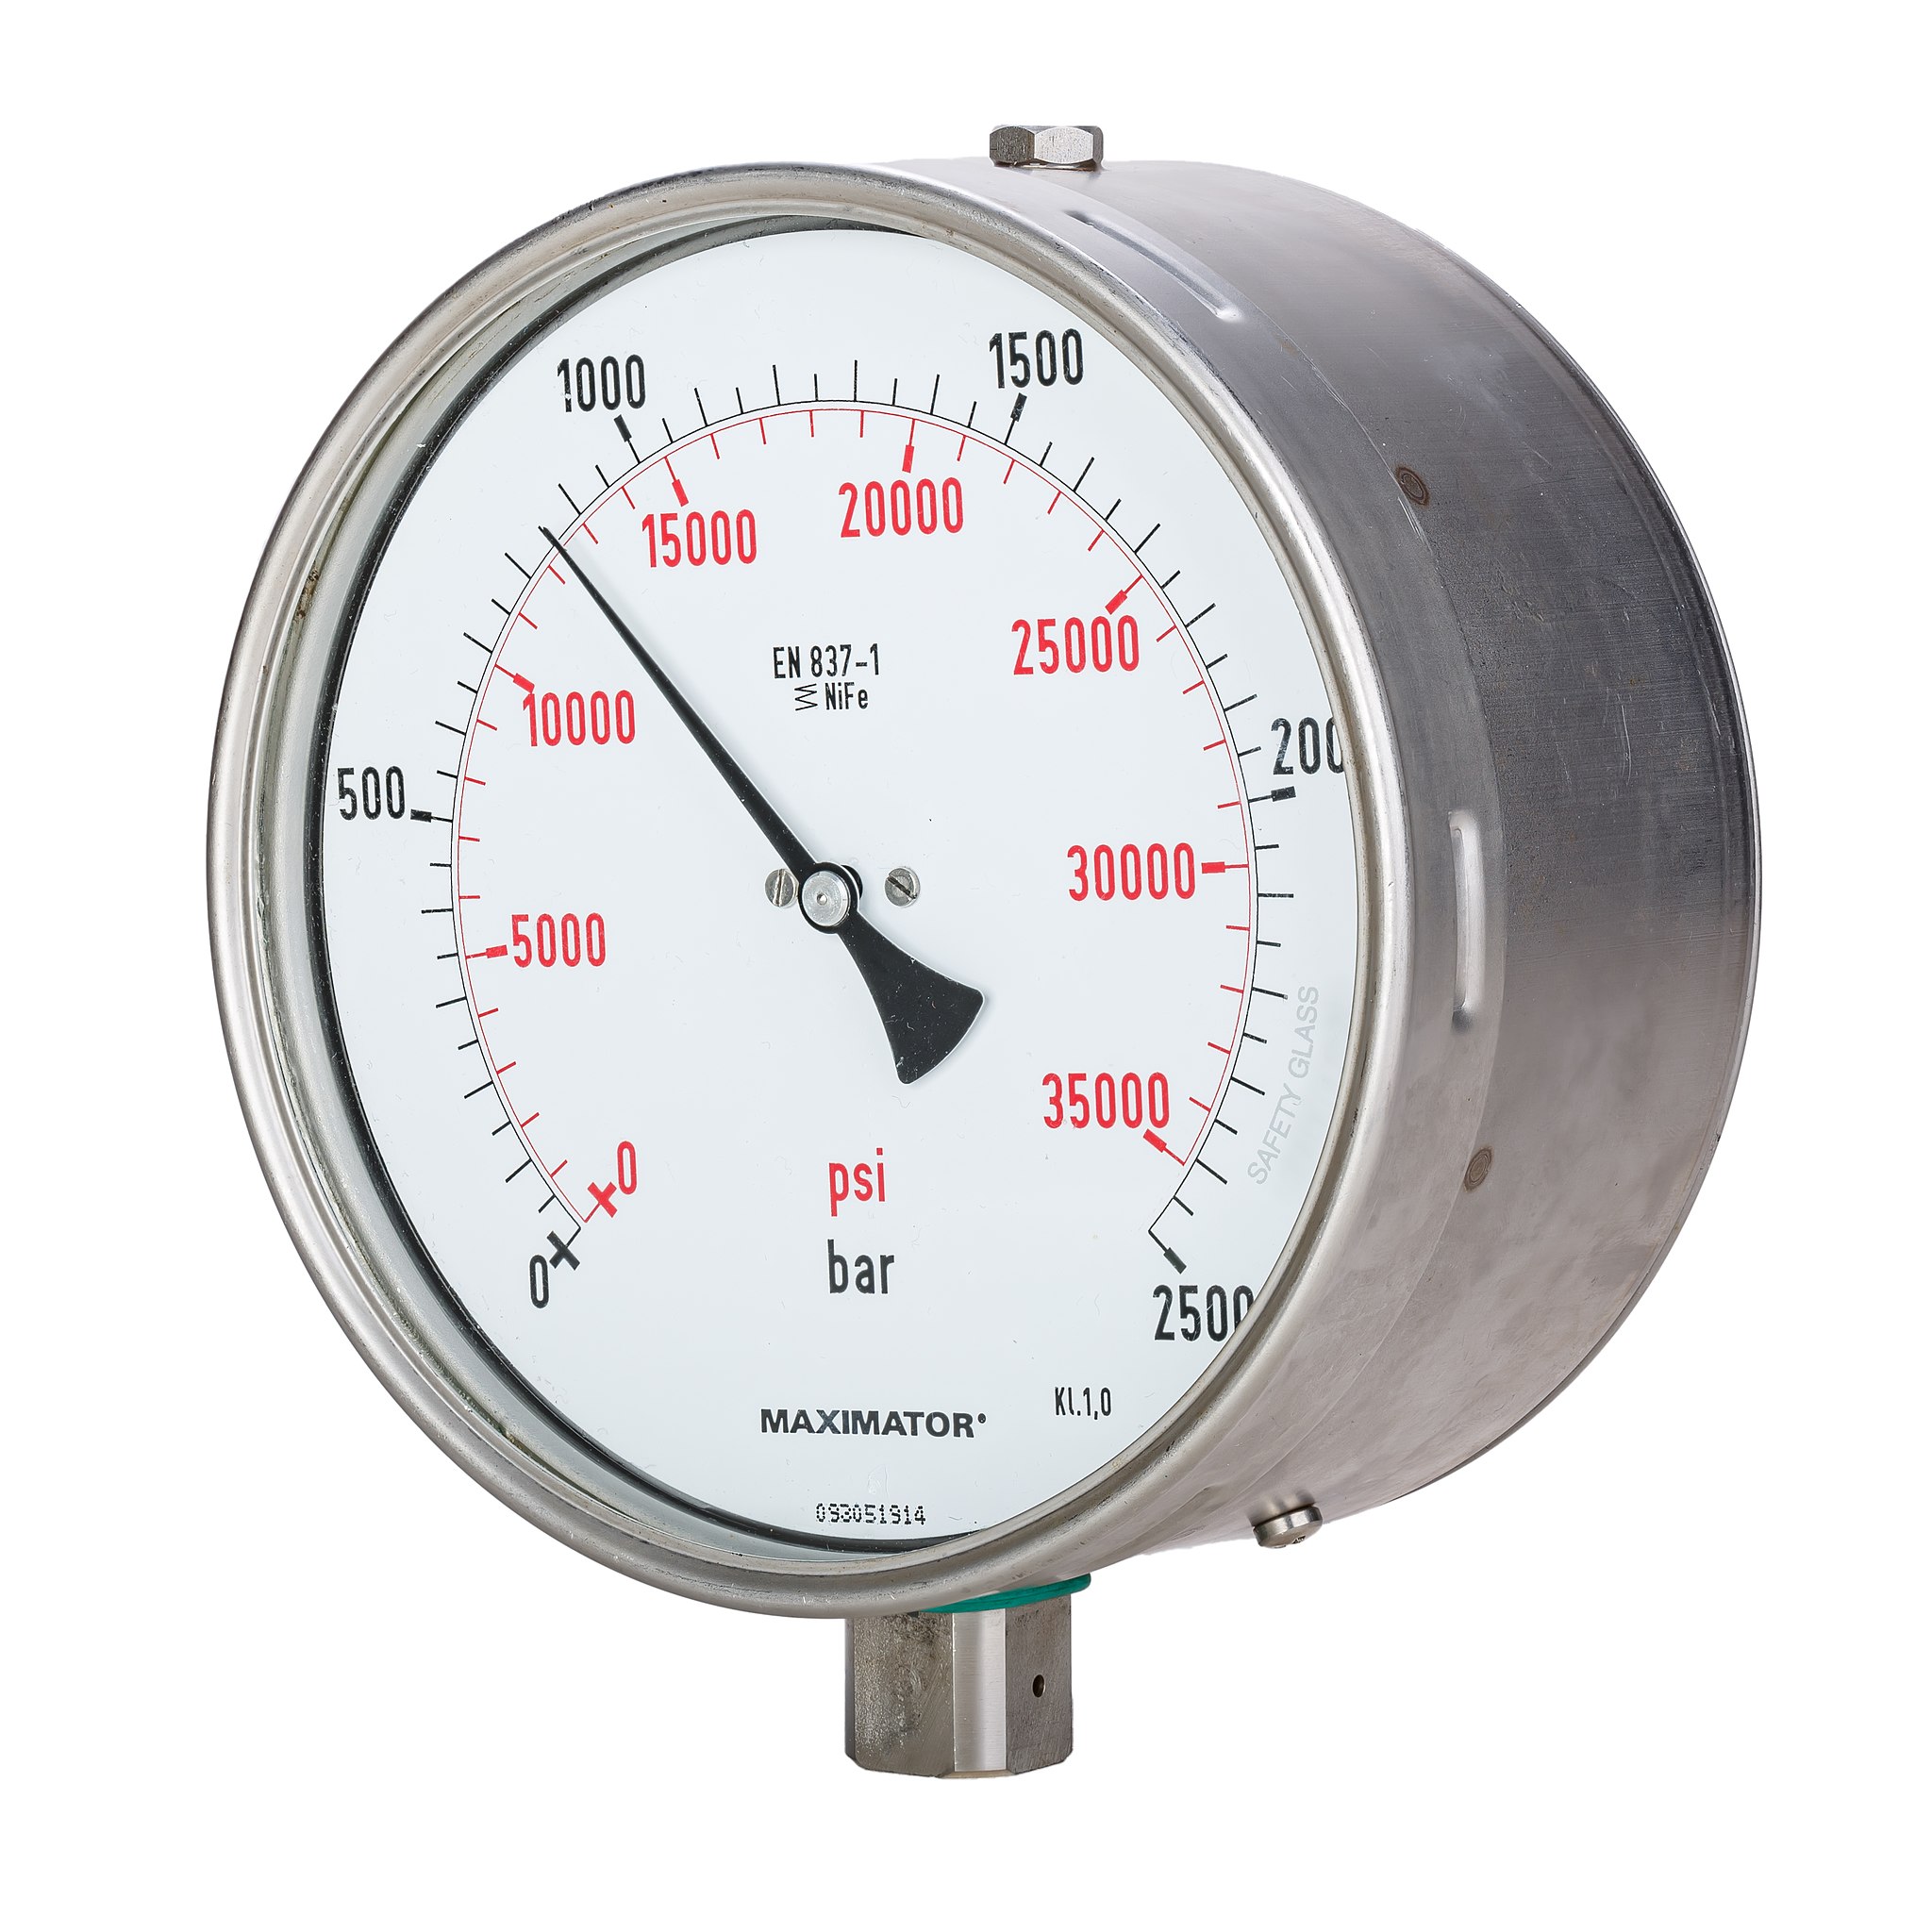 High pressure/low volume compressors - Atlas Copco Magyarország